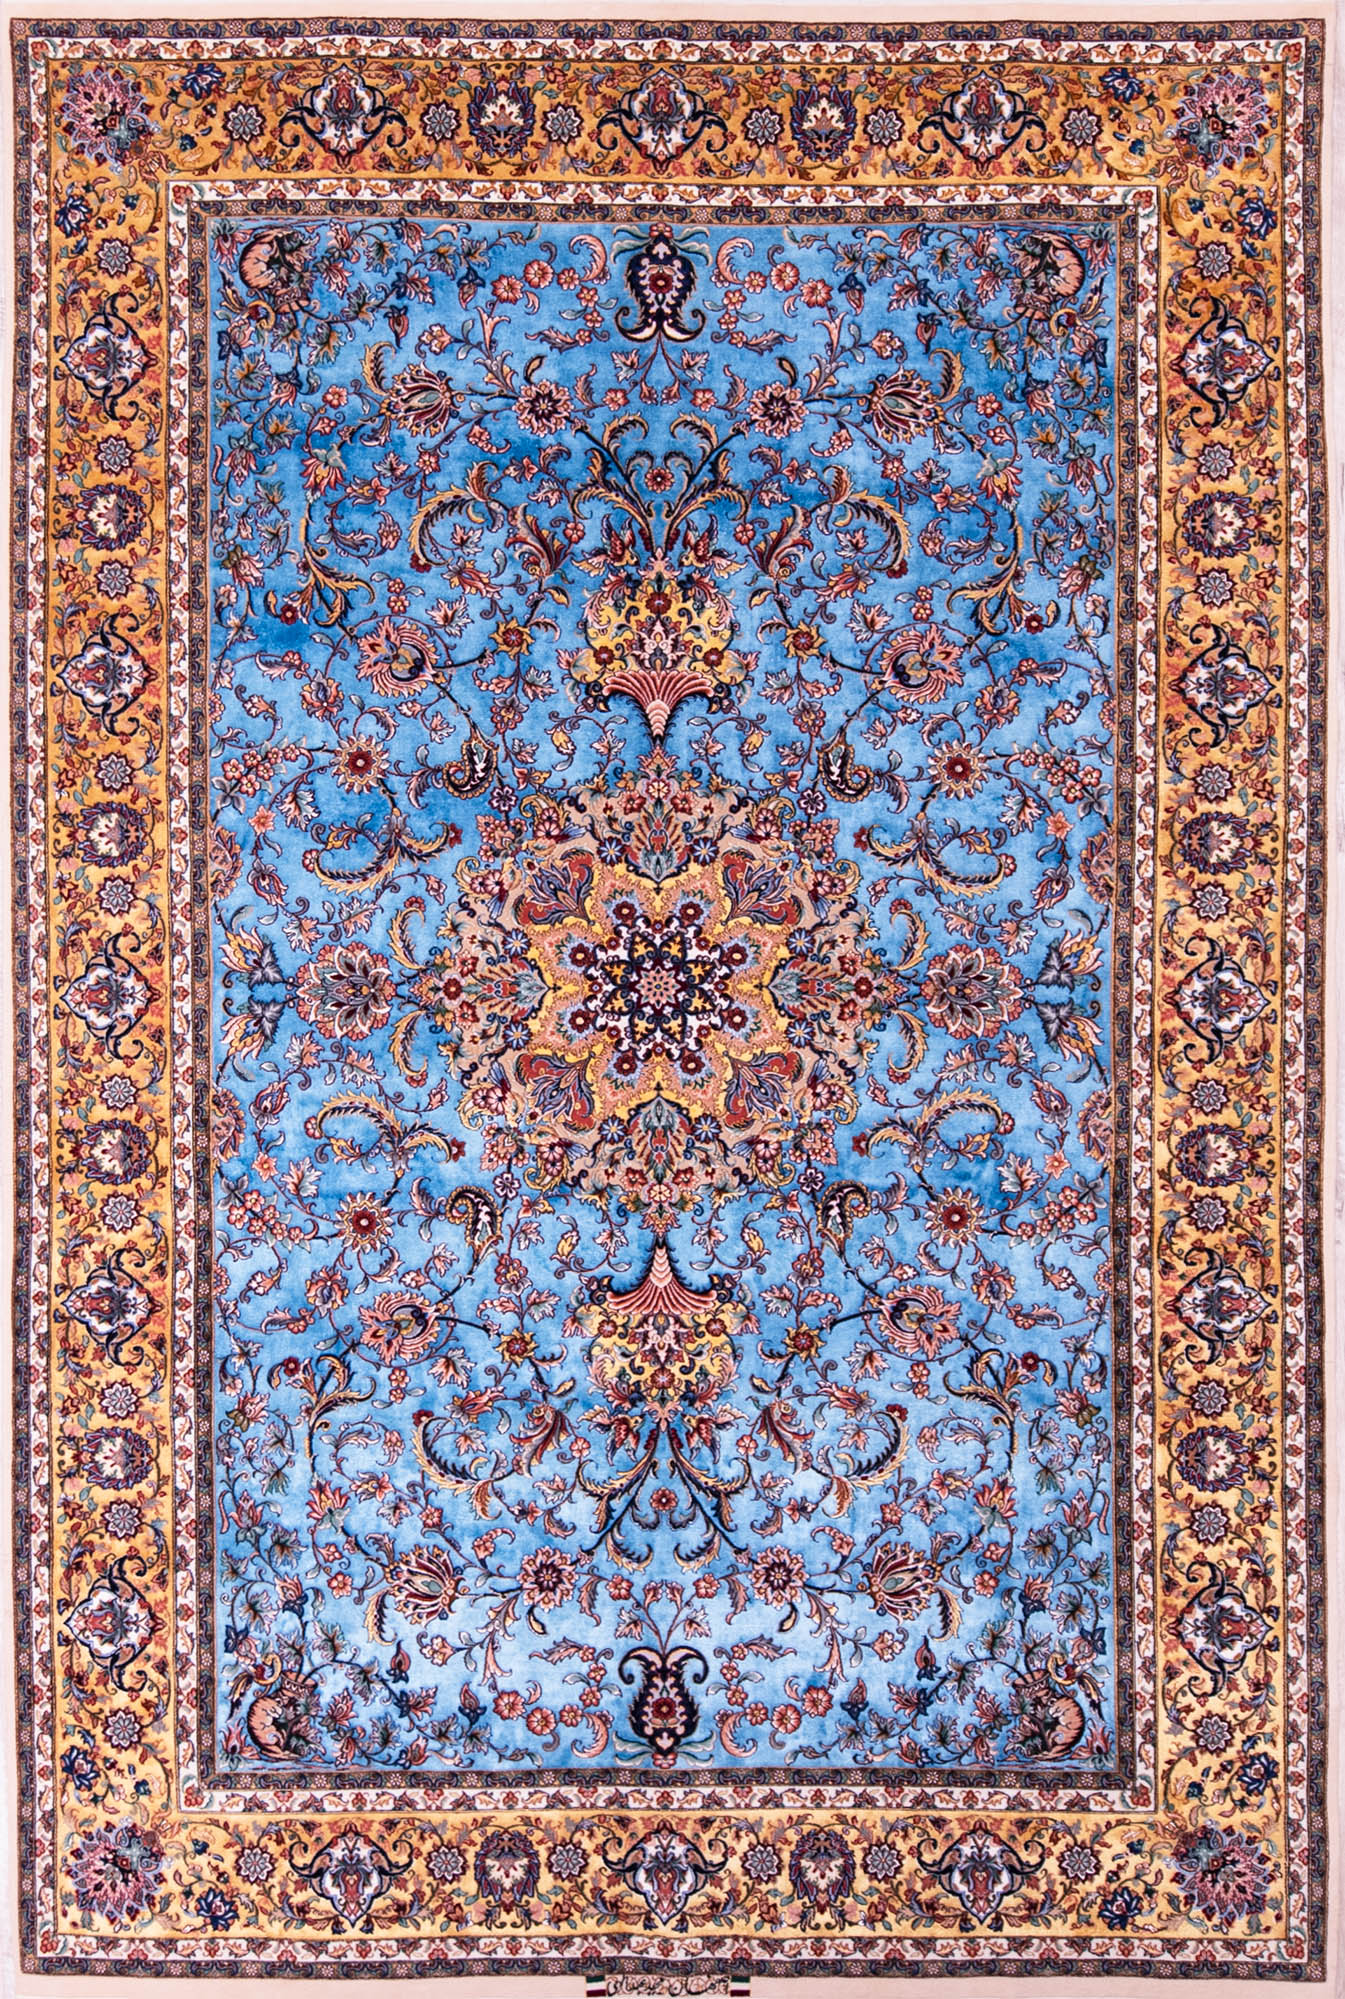 Iranian Carpet, Blue Rugs, Esfahan Carpets